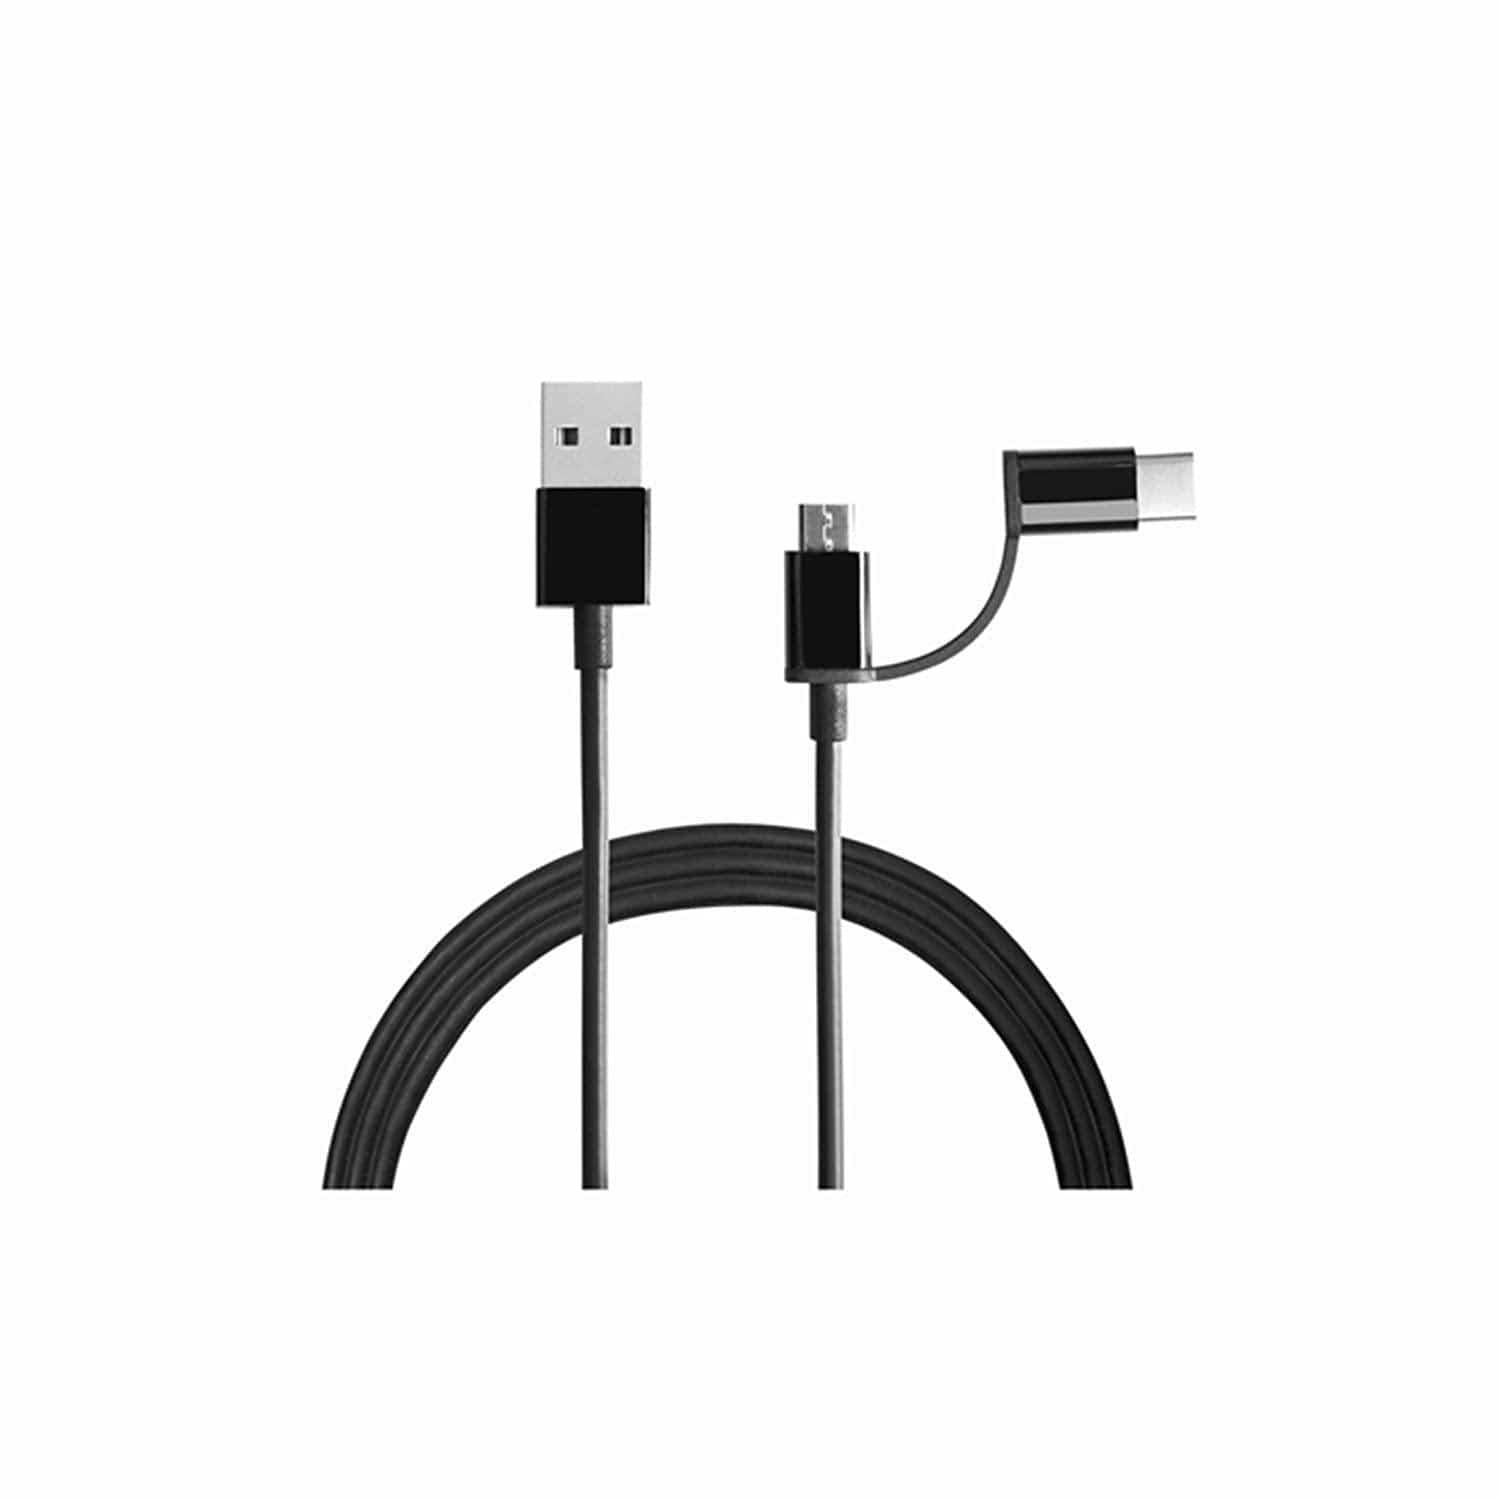 Mi 2-in-1 USB Cable-Mobile Accessories-dealsplant